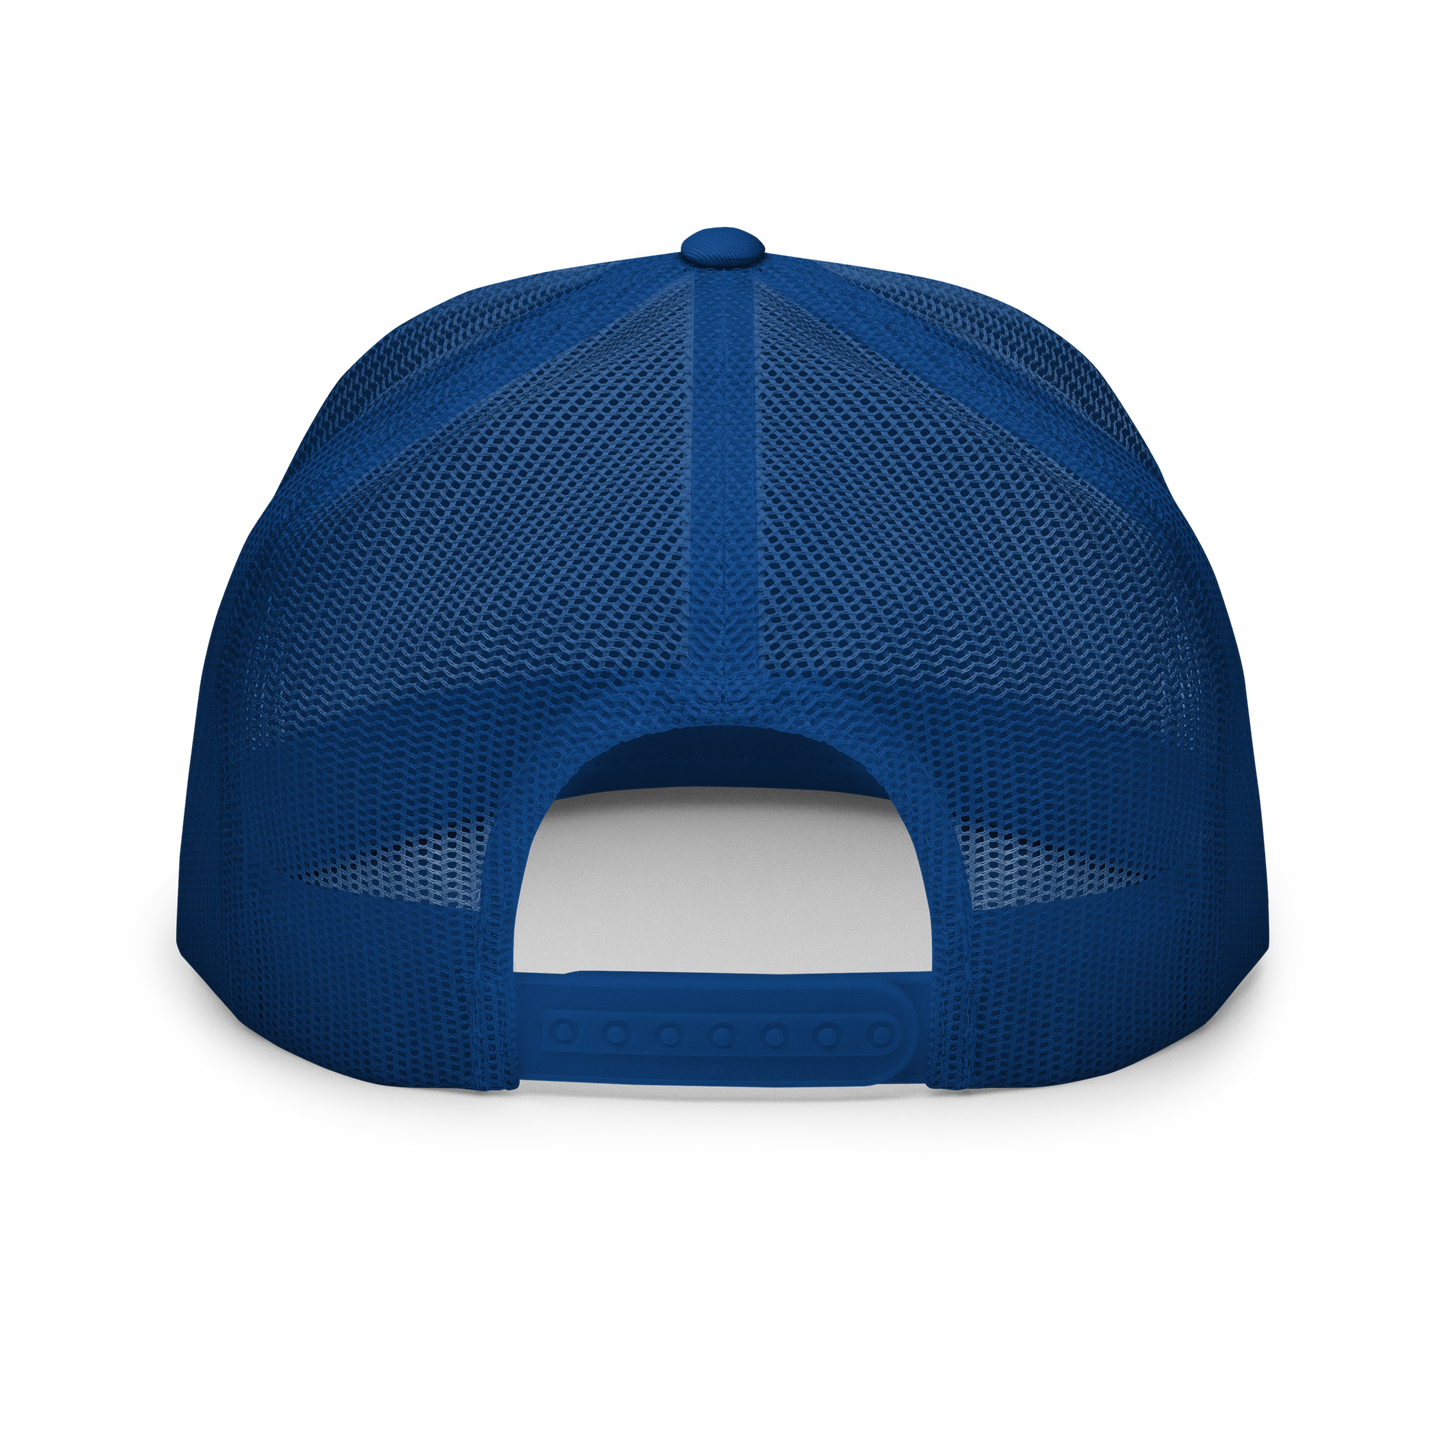 B00BS Hat